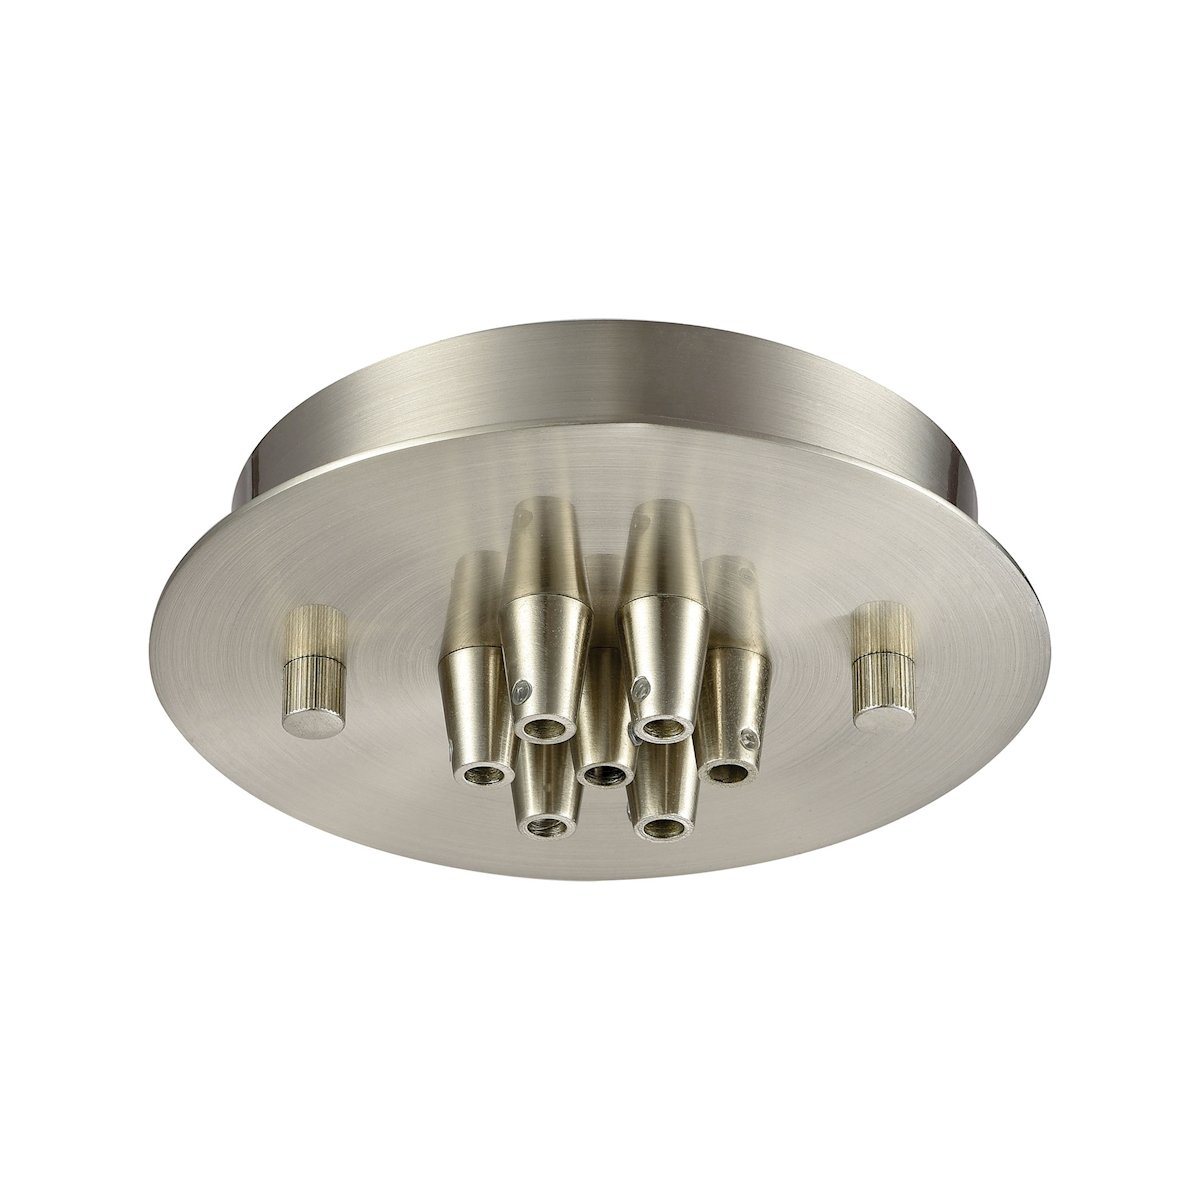 Illuminaire Accessories 7 Light Small Round Canopy In Satin Nickel Parts/Hardware Elk Lighting 